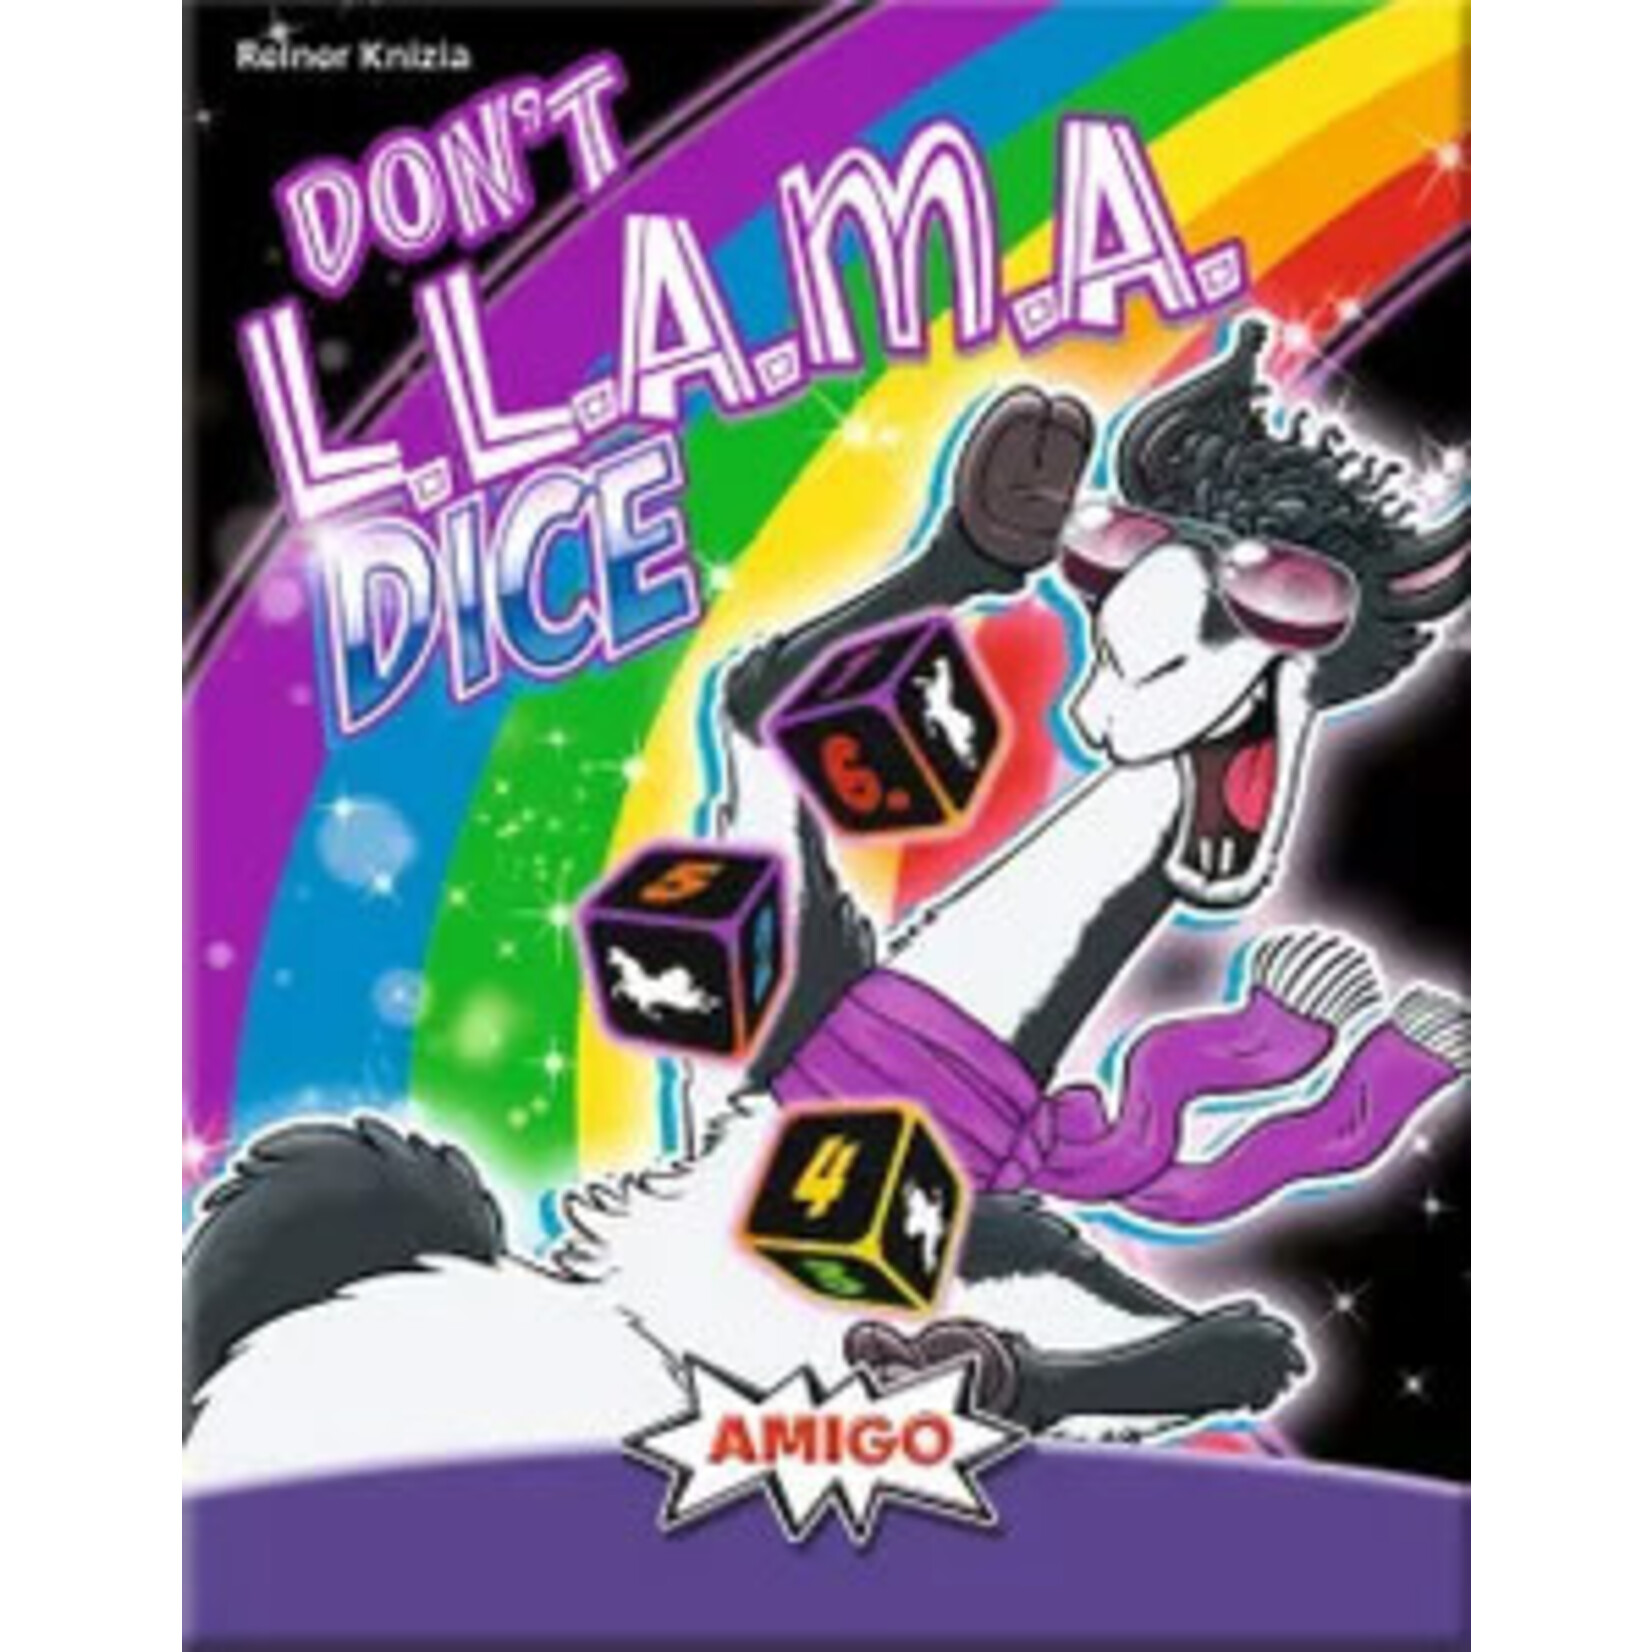 Don't Llama Dice Game